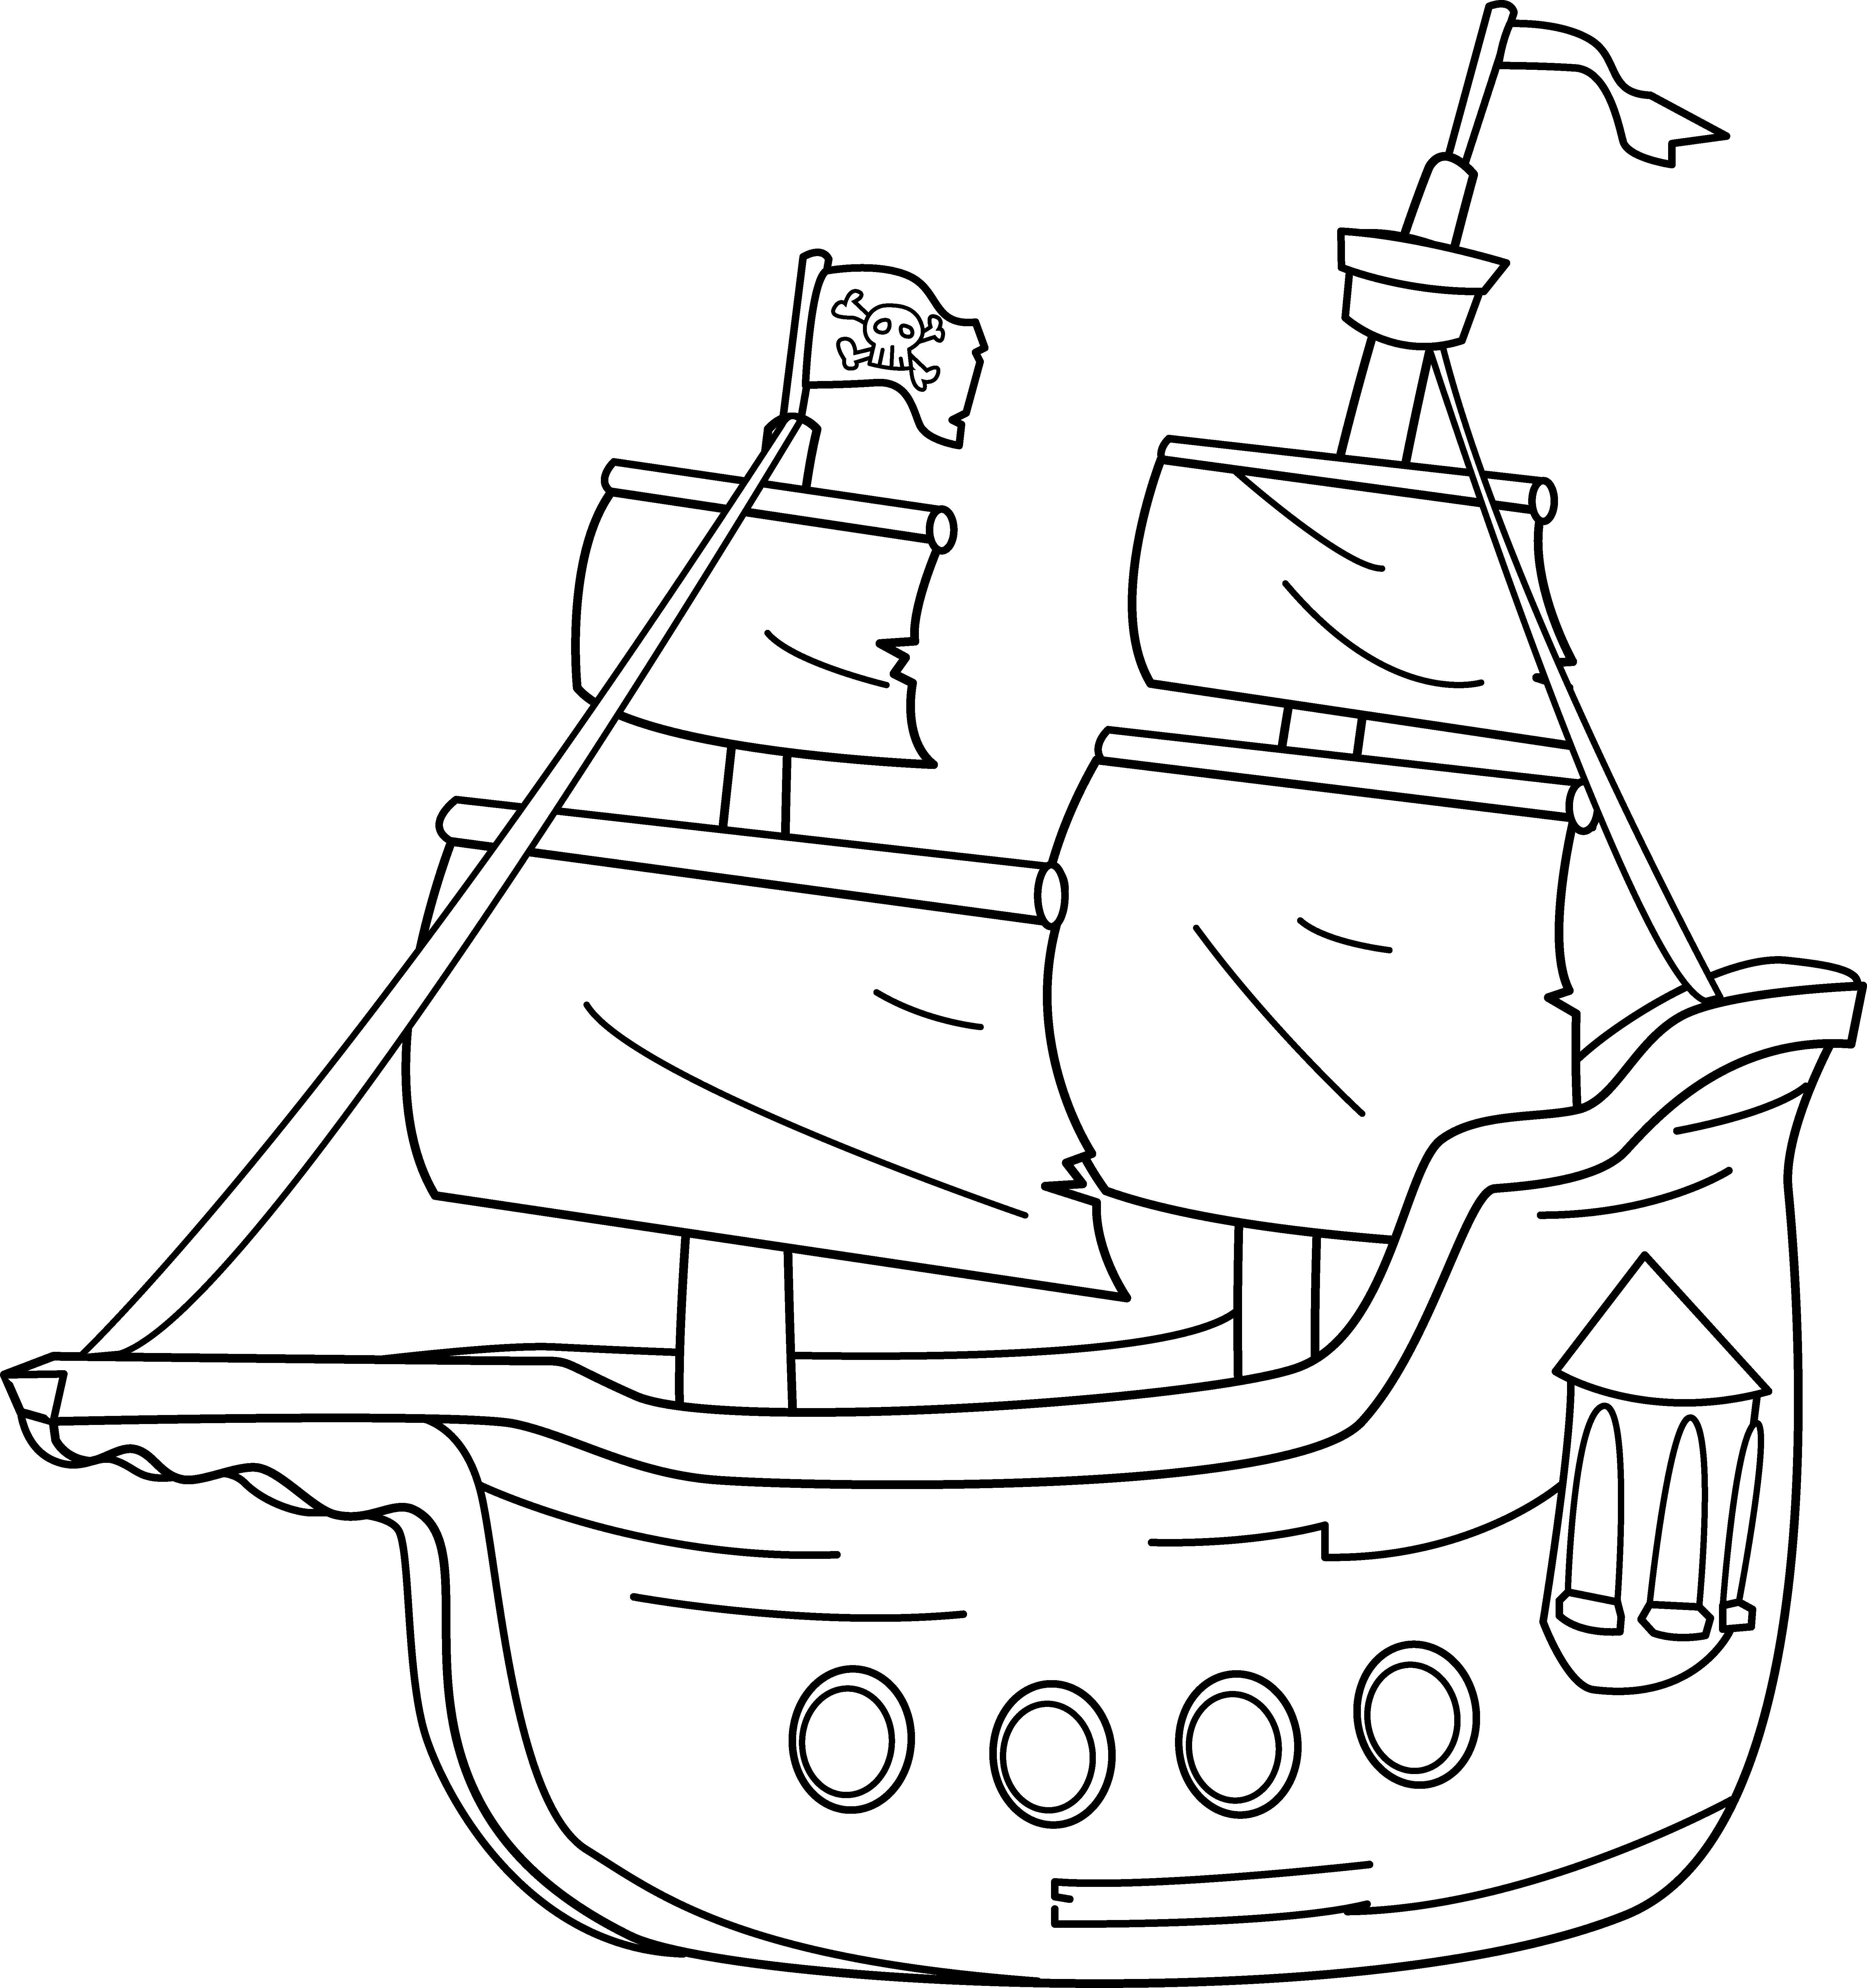 Coloriage Bateau pirate #138245 (Transport) – Dessin à colorier